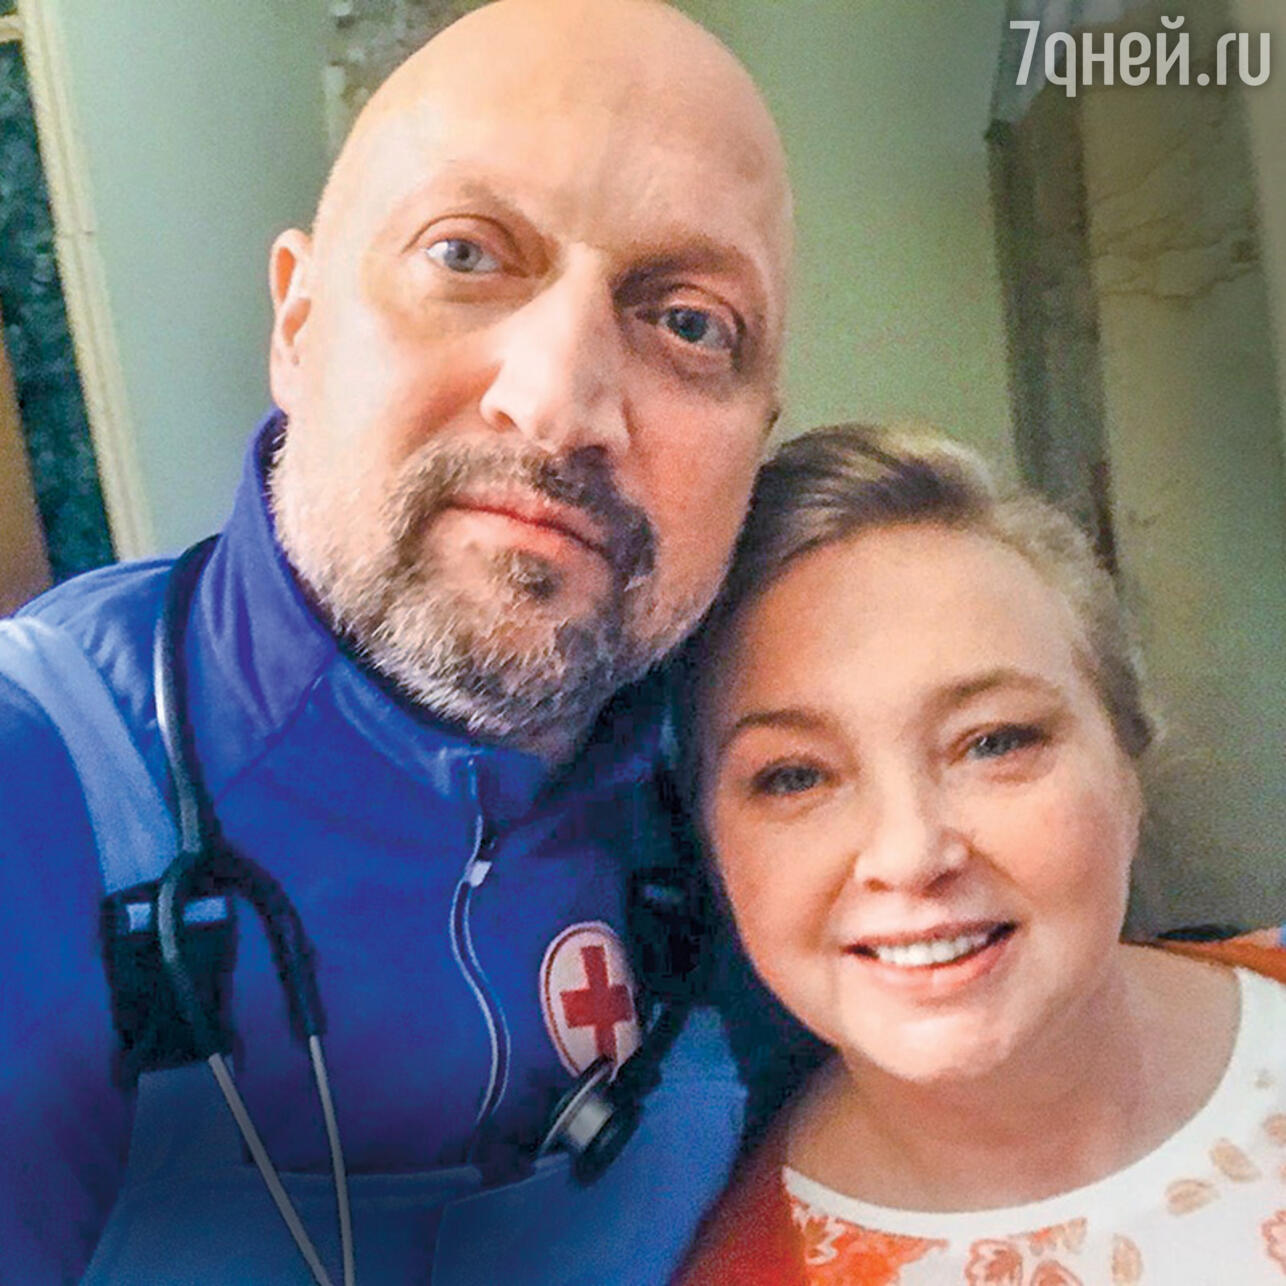 Марина Яковлева: «После аварии Куценко тащил меня на носилках в самолет» -  7Дней.ру